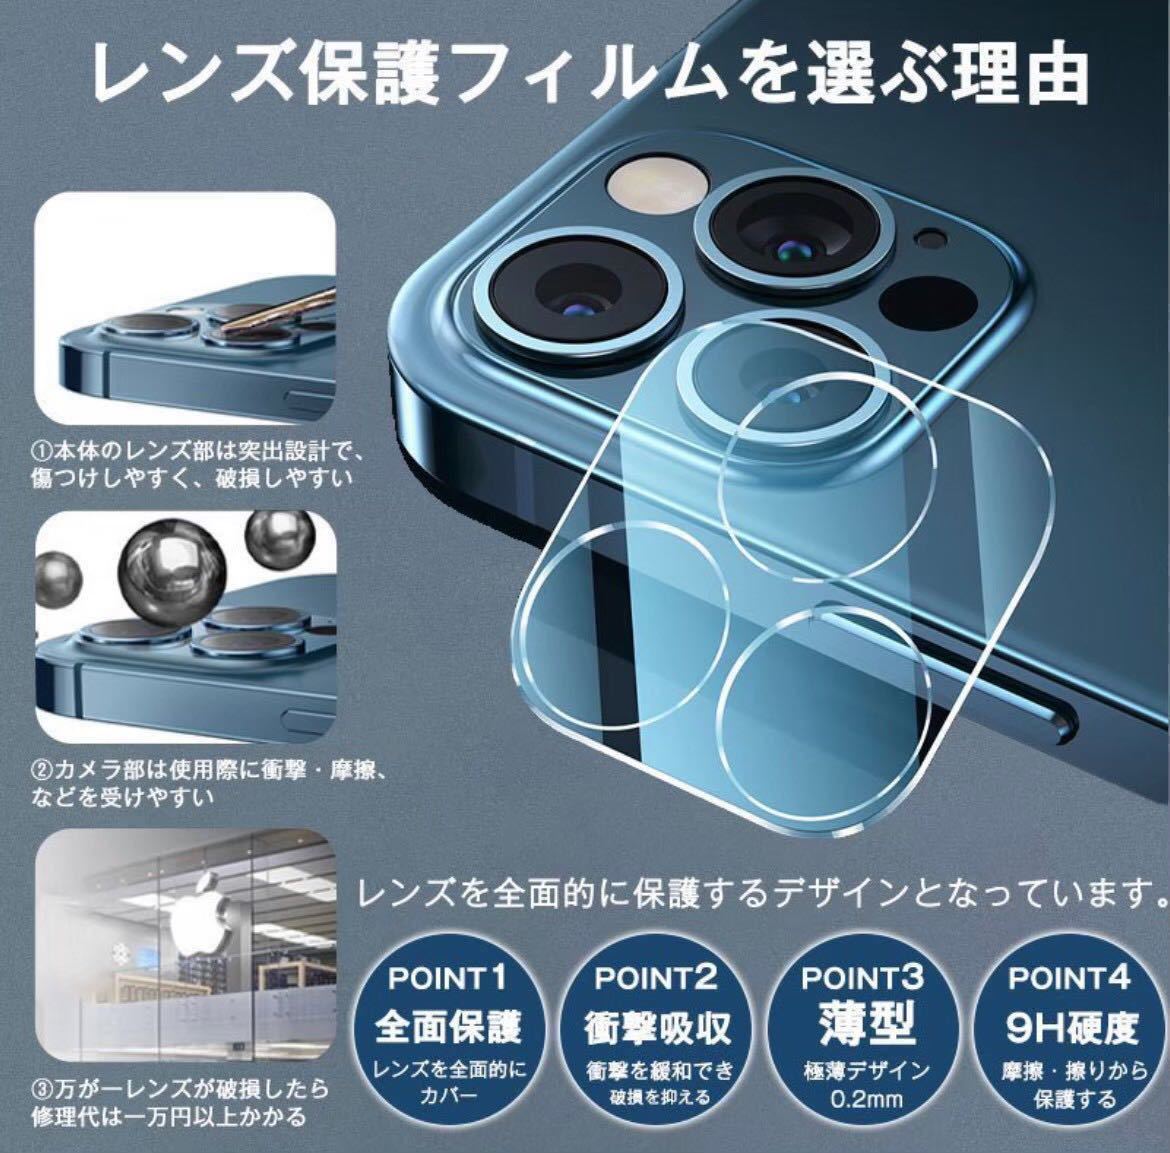 【iPhone12ProMax】全画面ガラスフィルム＋カメラ保護フィルム